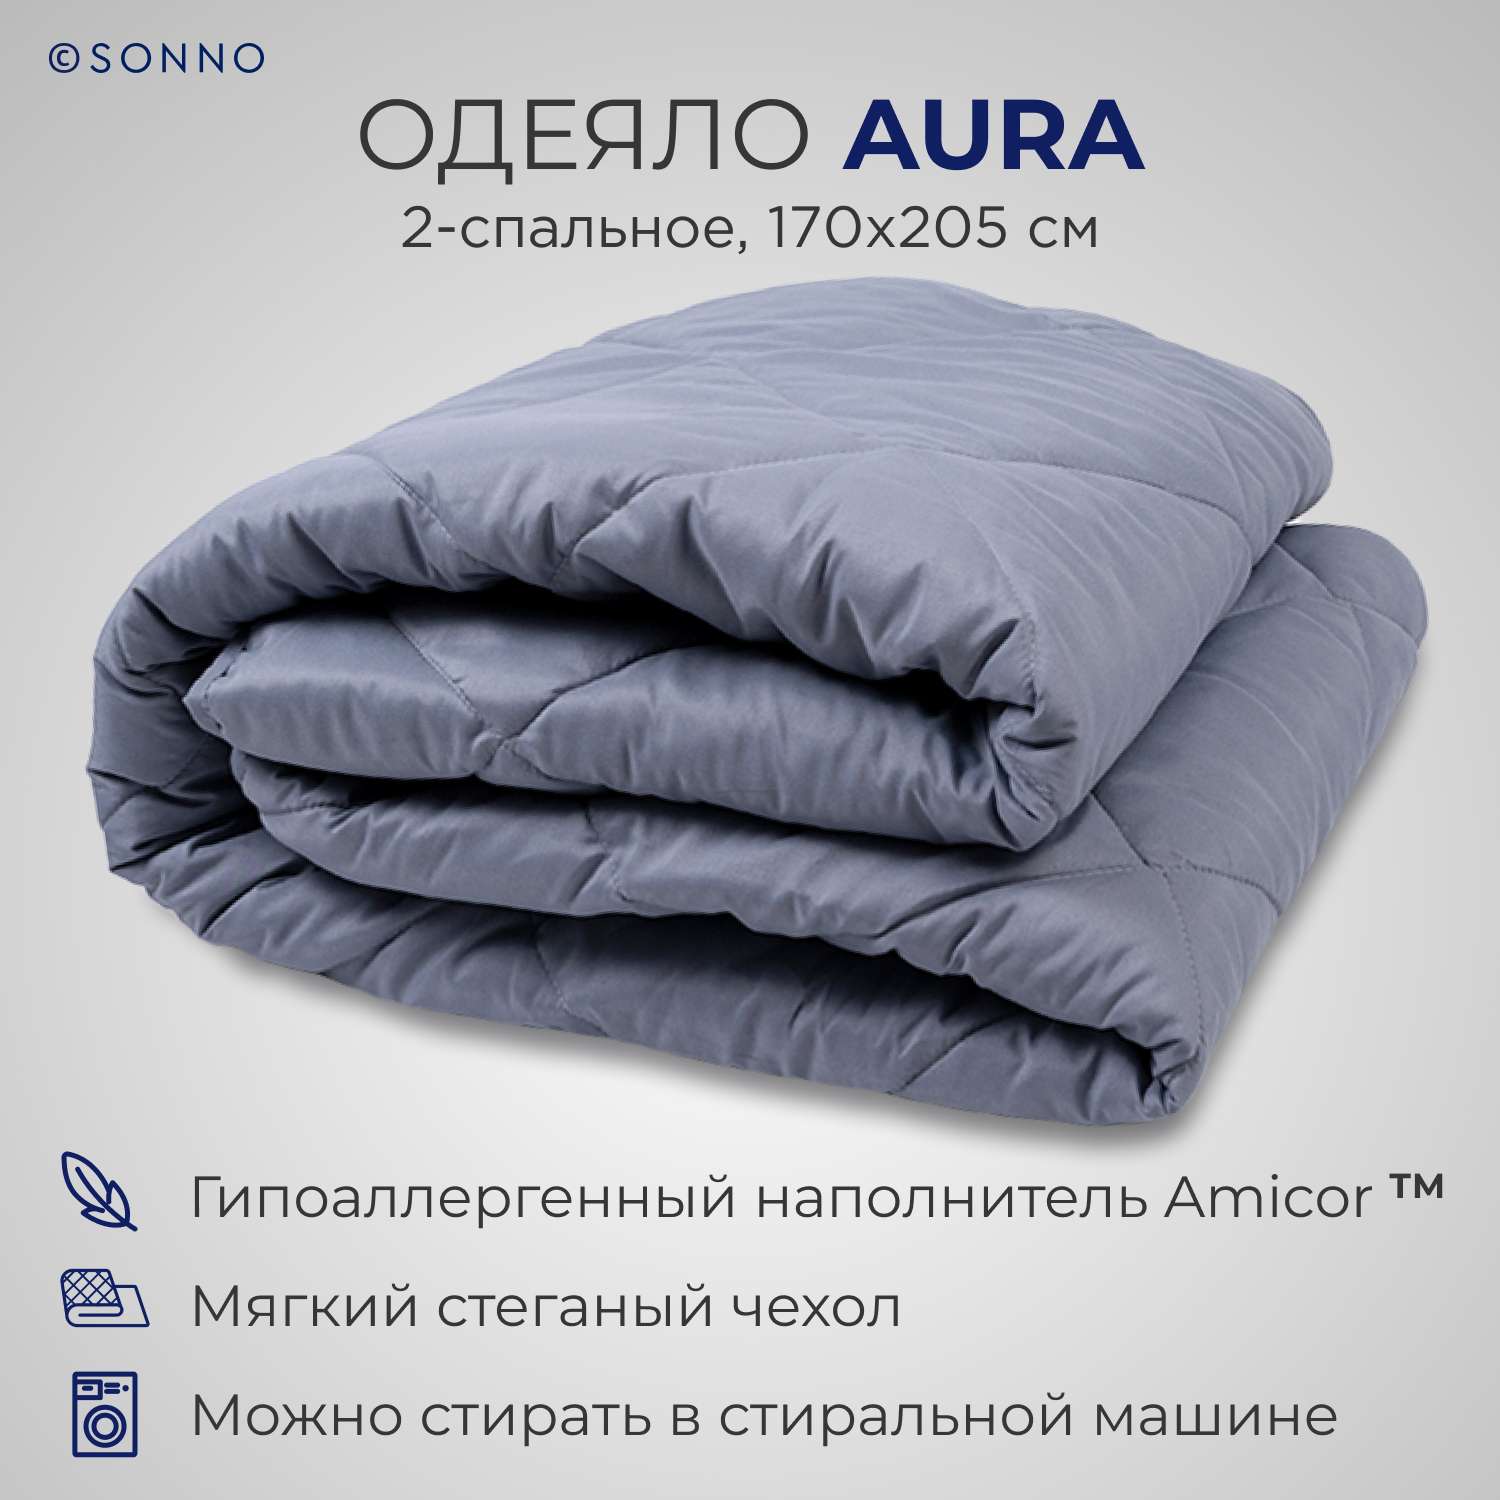 Одеяло SONNO AURA 2-сп. 170х205 Amicor TM Цвет Французский серый - фото 1